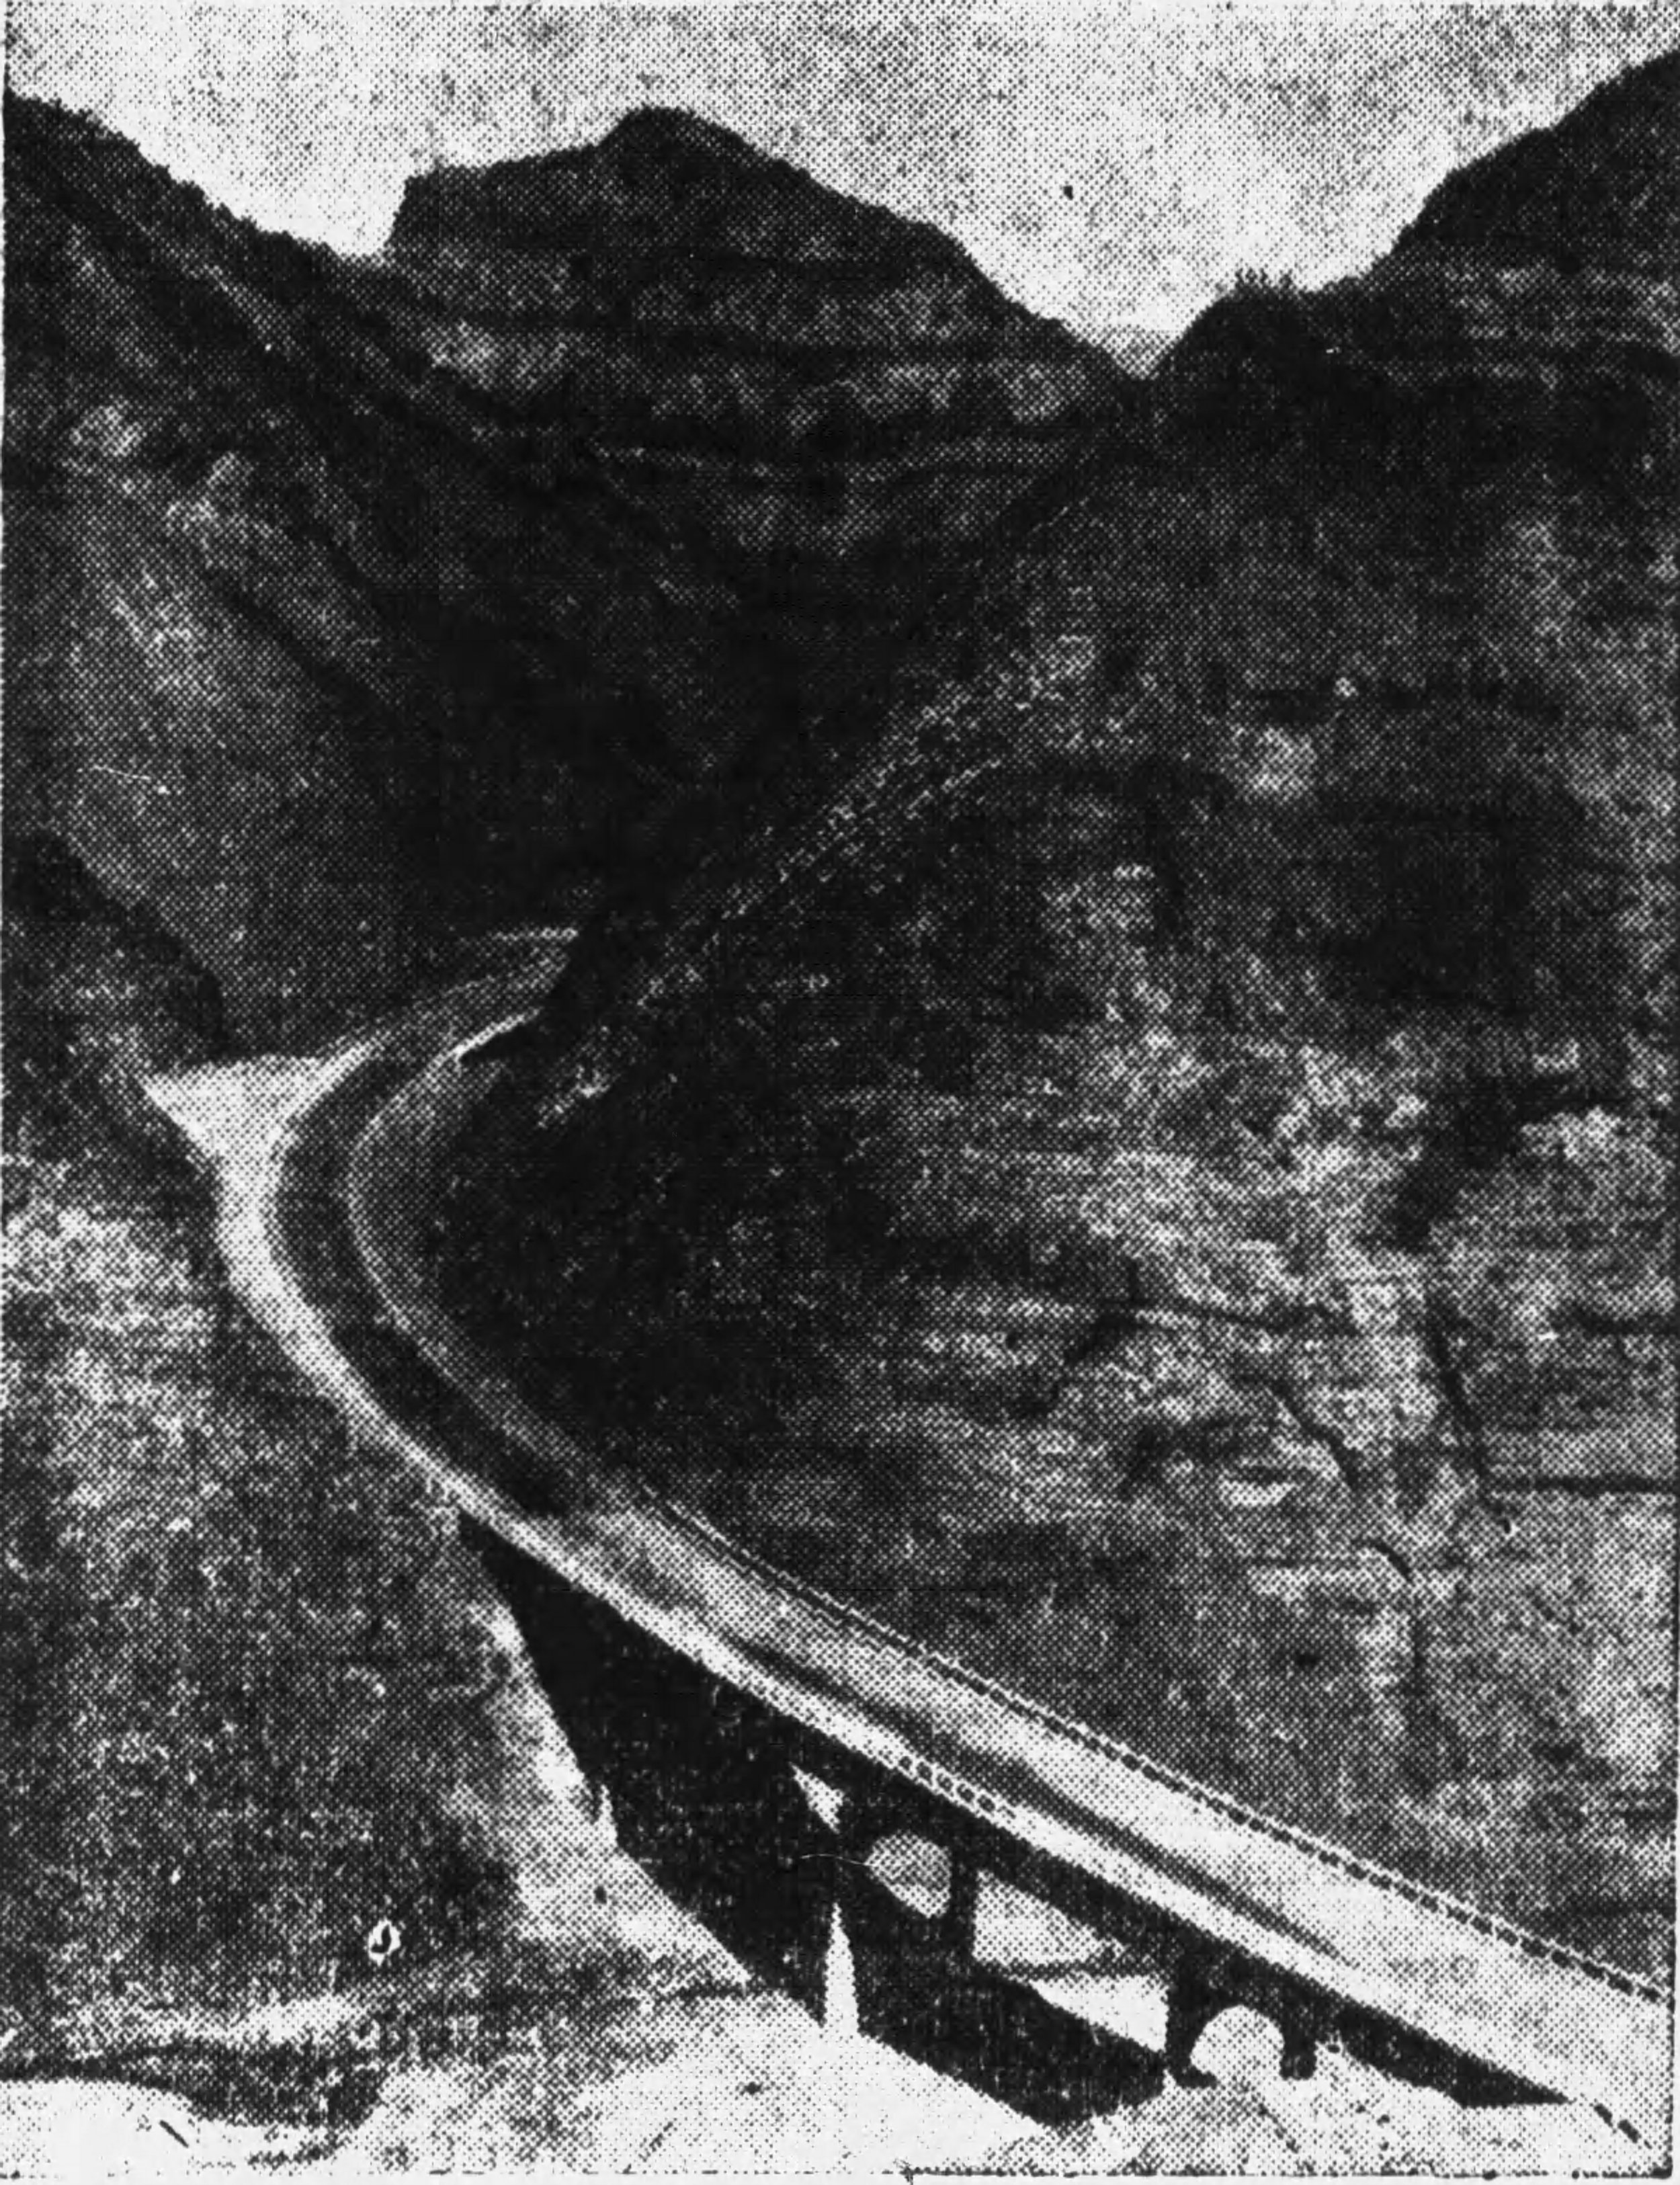  Piru Creek Gorge  1933 Oakland Tribune Archive 